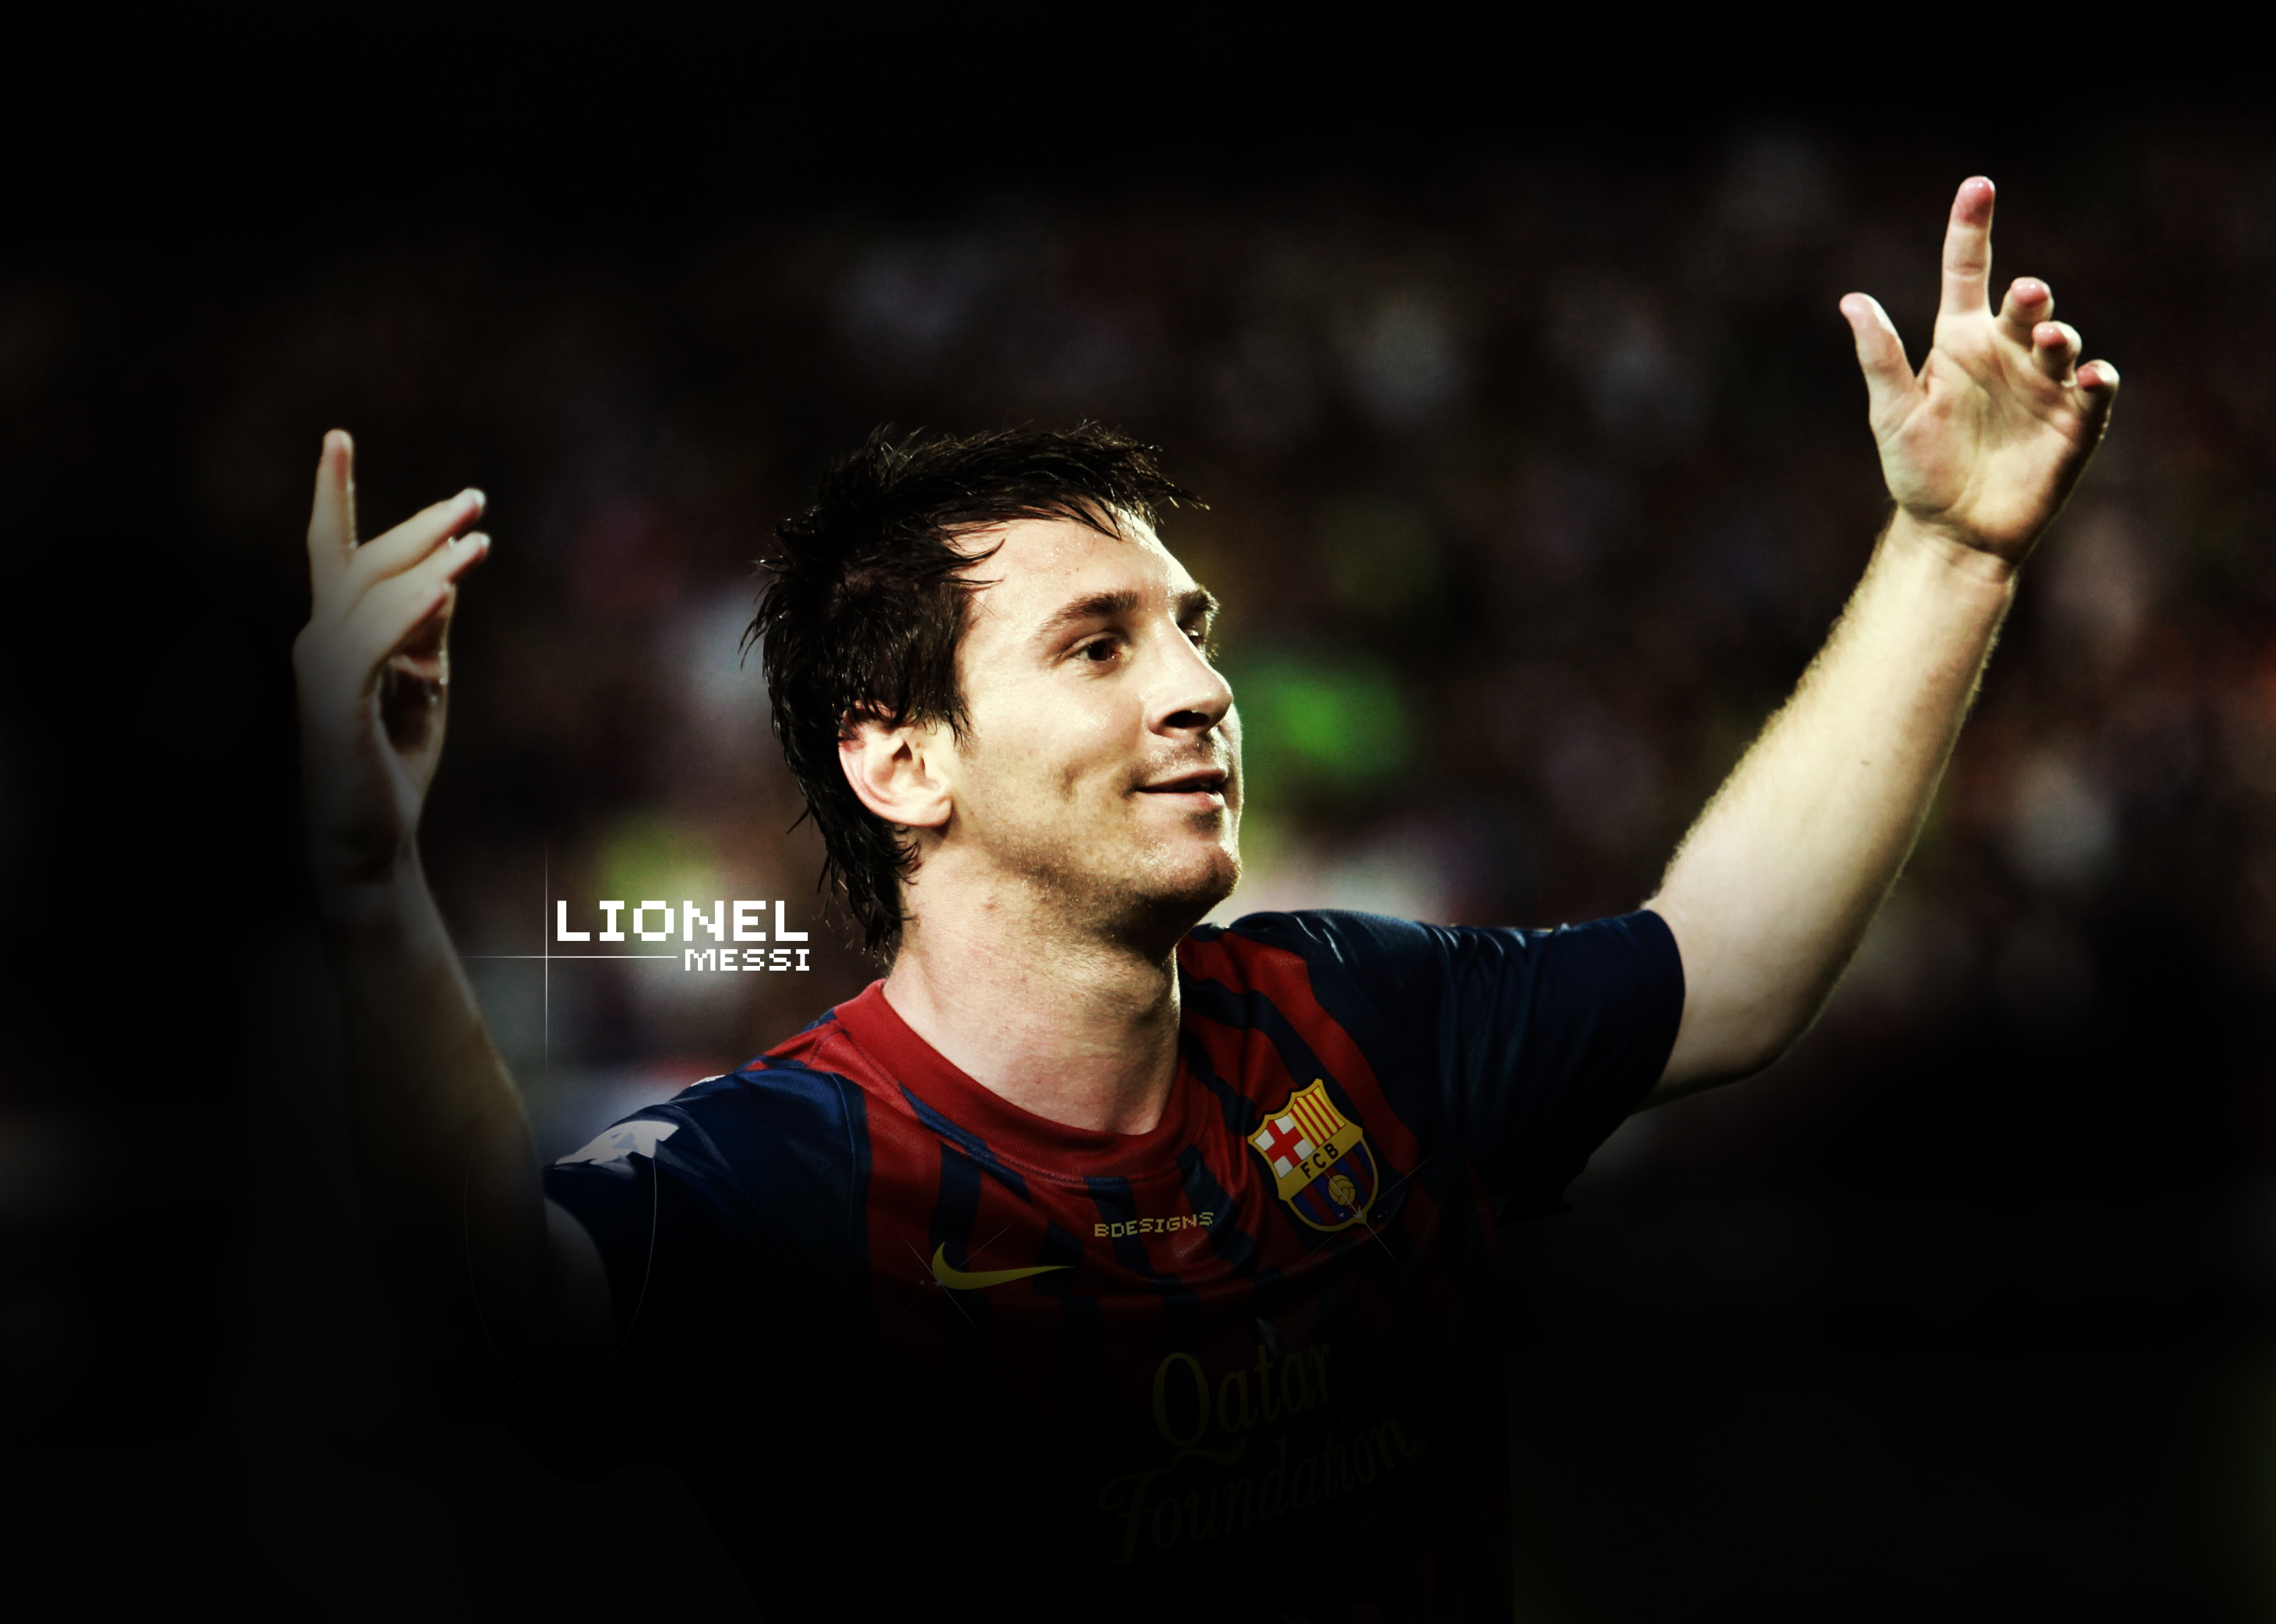 Lionel Messi Full HD Wallpaper